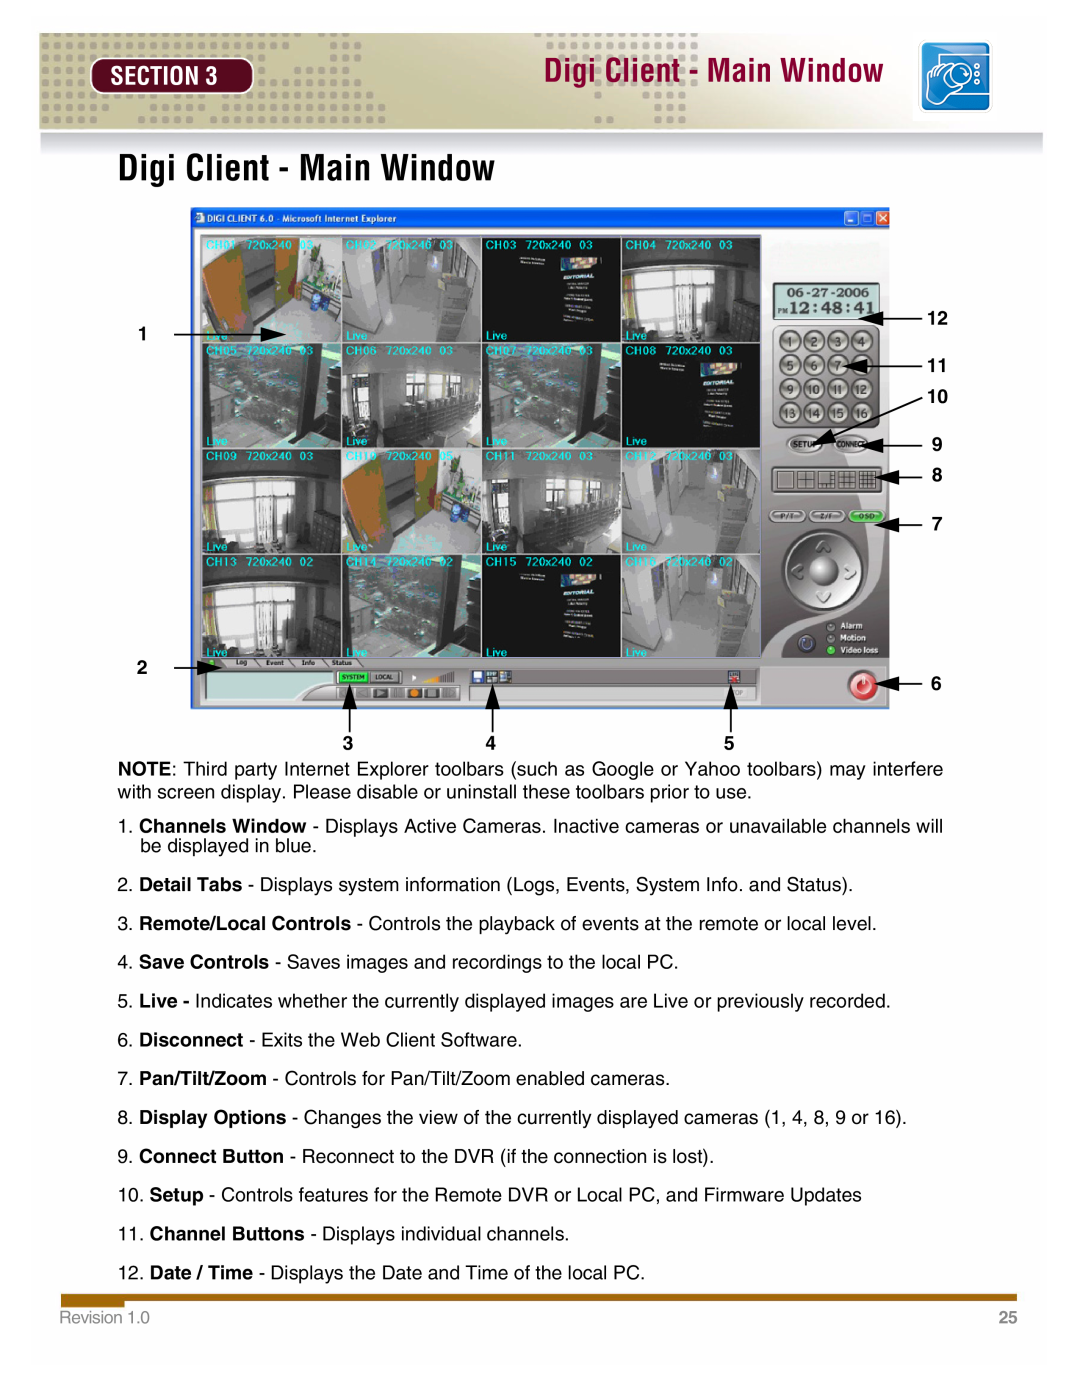 LOREX Technology DHU500 manual Digi Client - Main Window, Section 